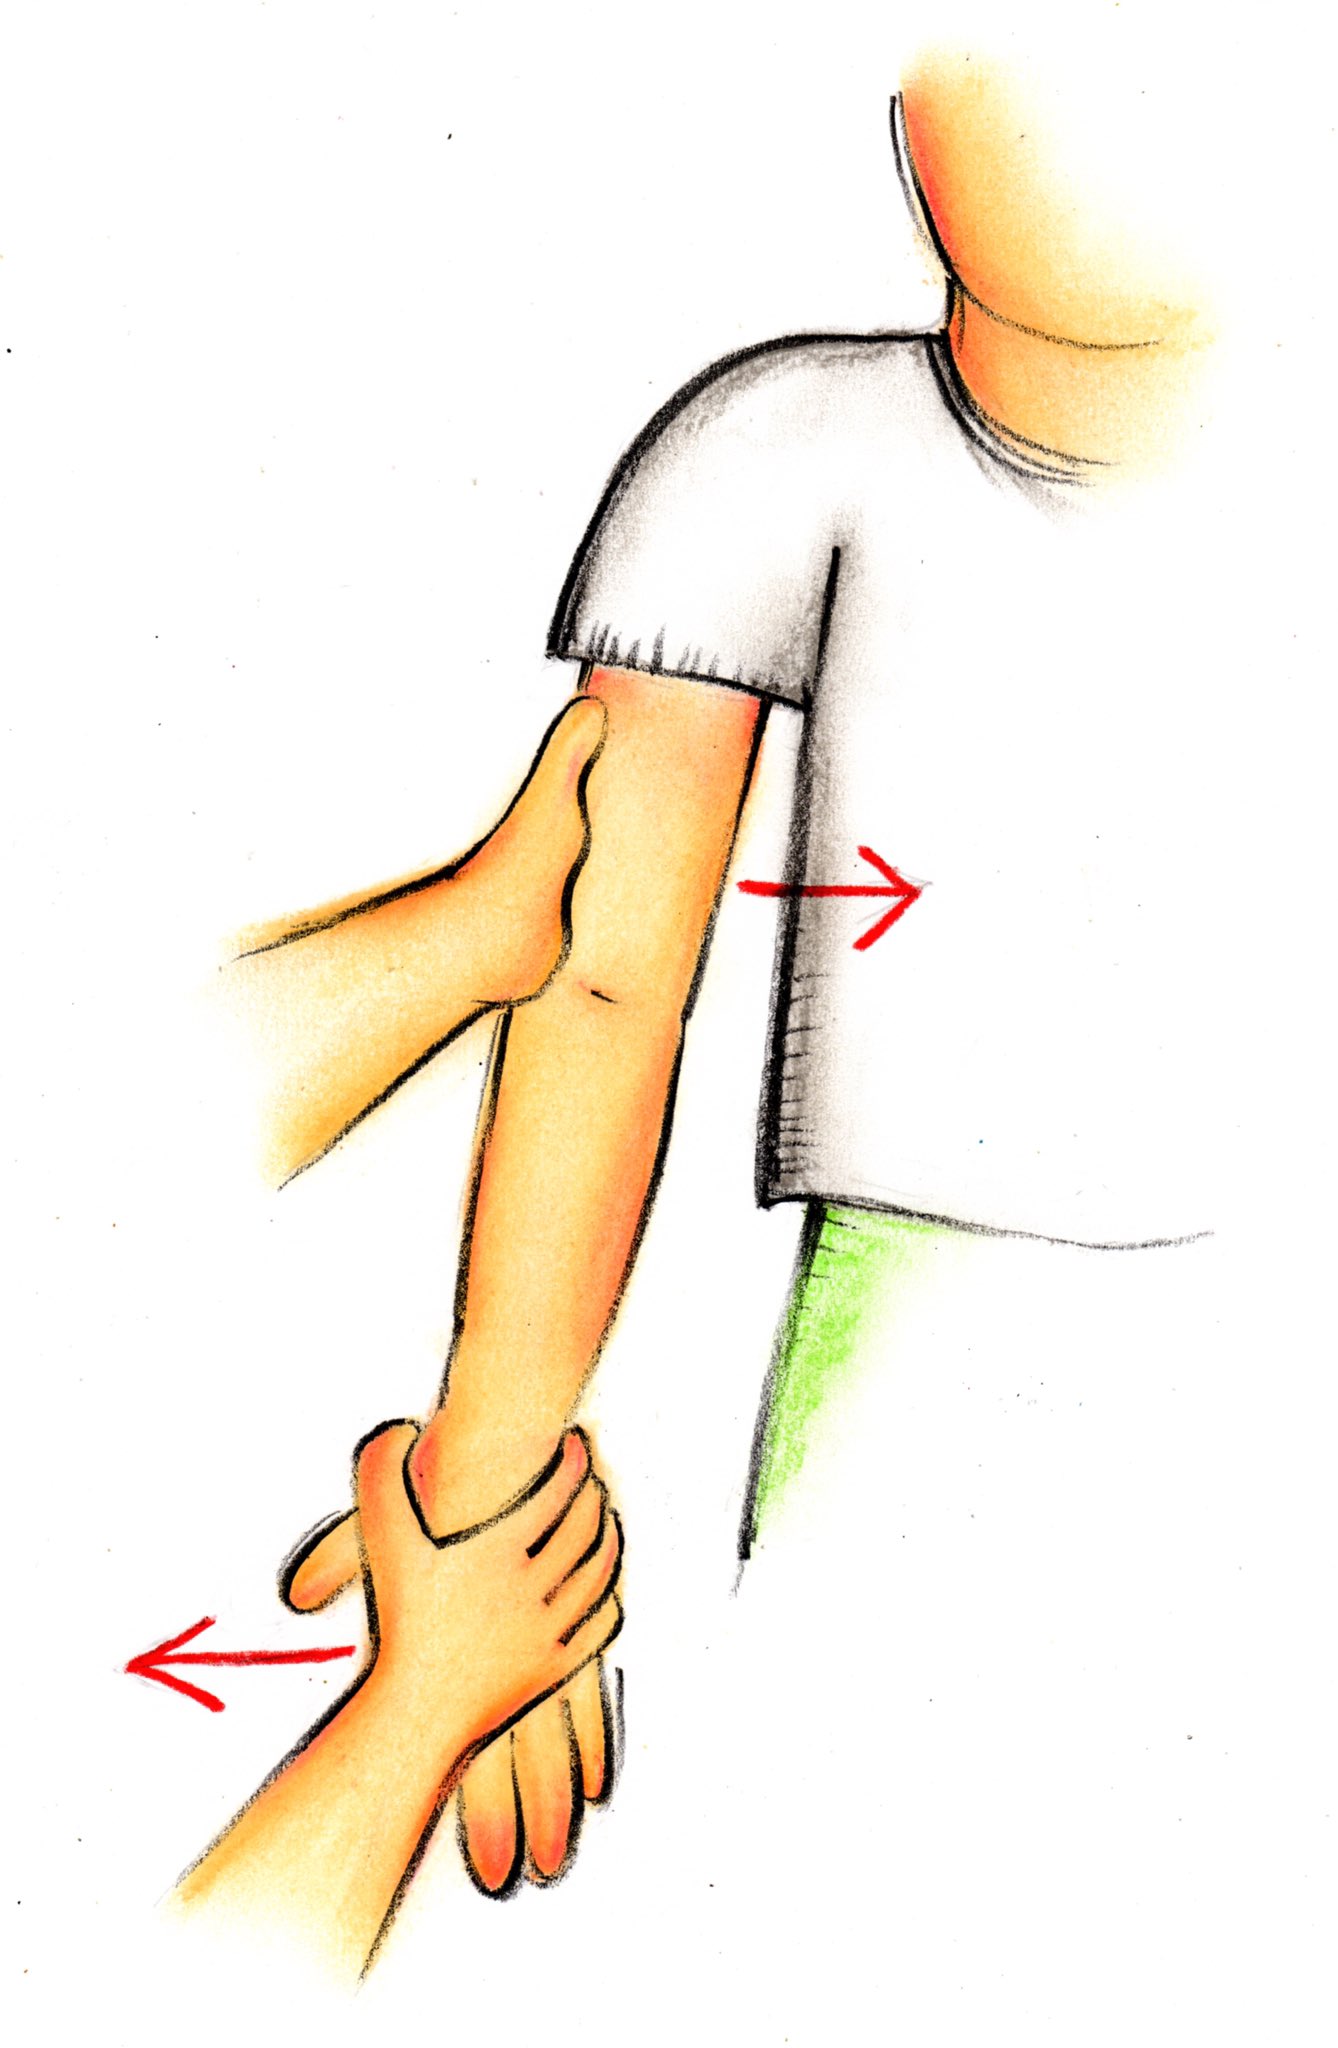 Twitter 上的 トレシピ 外傷性外側側副靭帯損傷 肘 検査 内反ストレステストは 肘を真っ直ぐ伸ばした状態で 片方の手で肘関節を固定し もう一方の手で手首を矢印の方向に動かします 痛みが出たら陽性です T Co Ot6rpegi4j T Co Ujl5s6tyfc